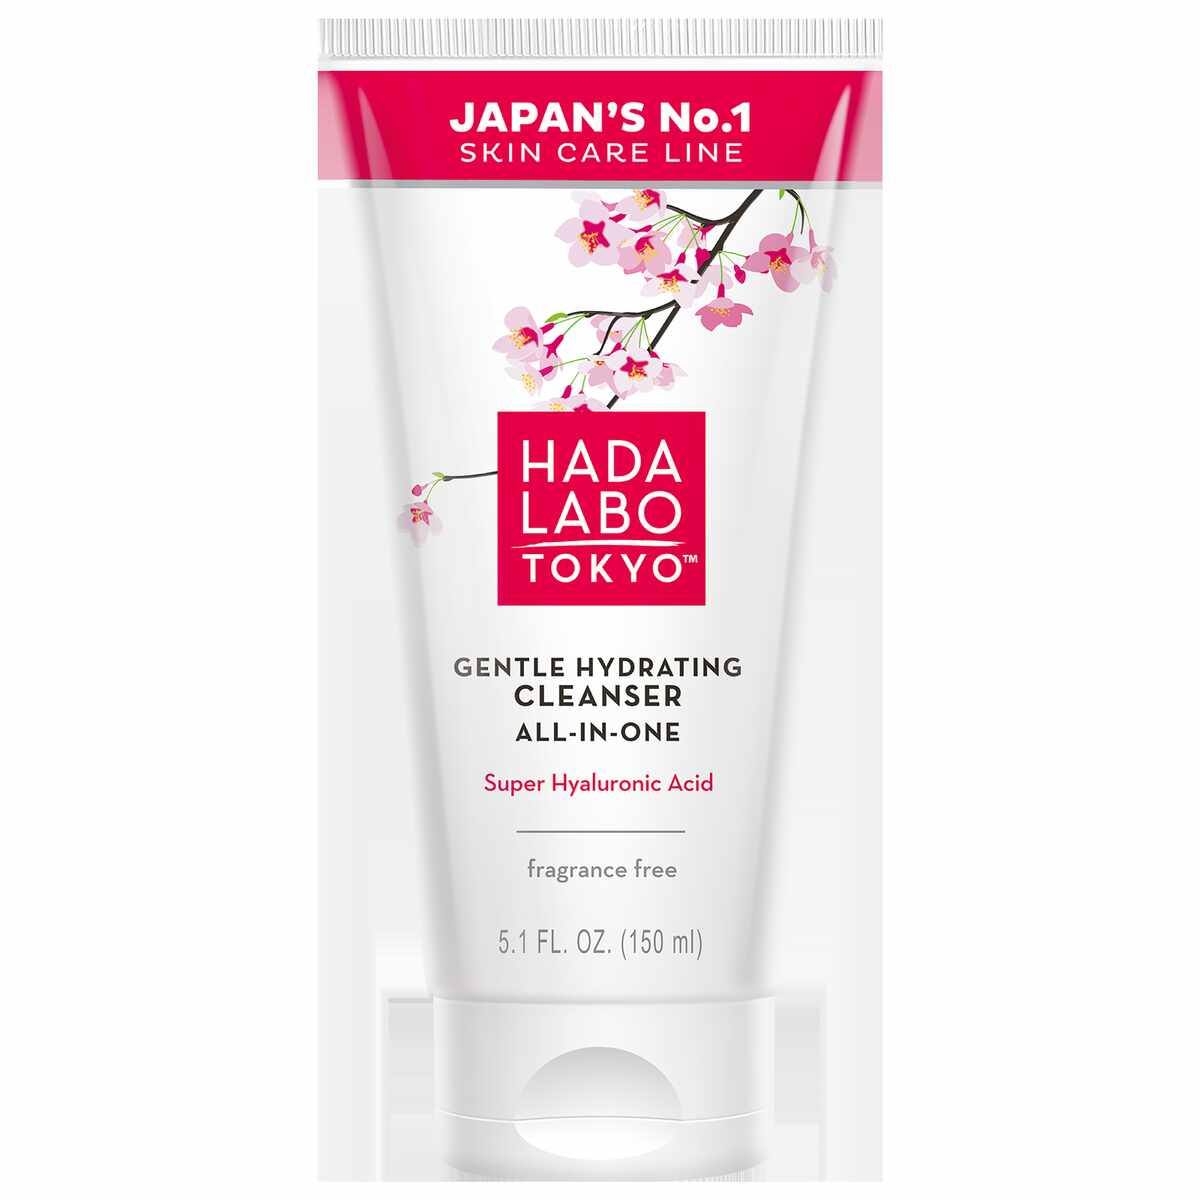 Gentle Hydrating Cleanser - Lotiune hidratanta de curatare cu super hyaluronic acid, 150 ml, Hada Labo Tokyo